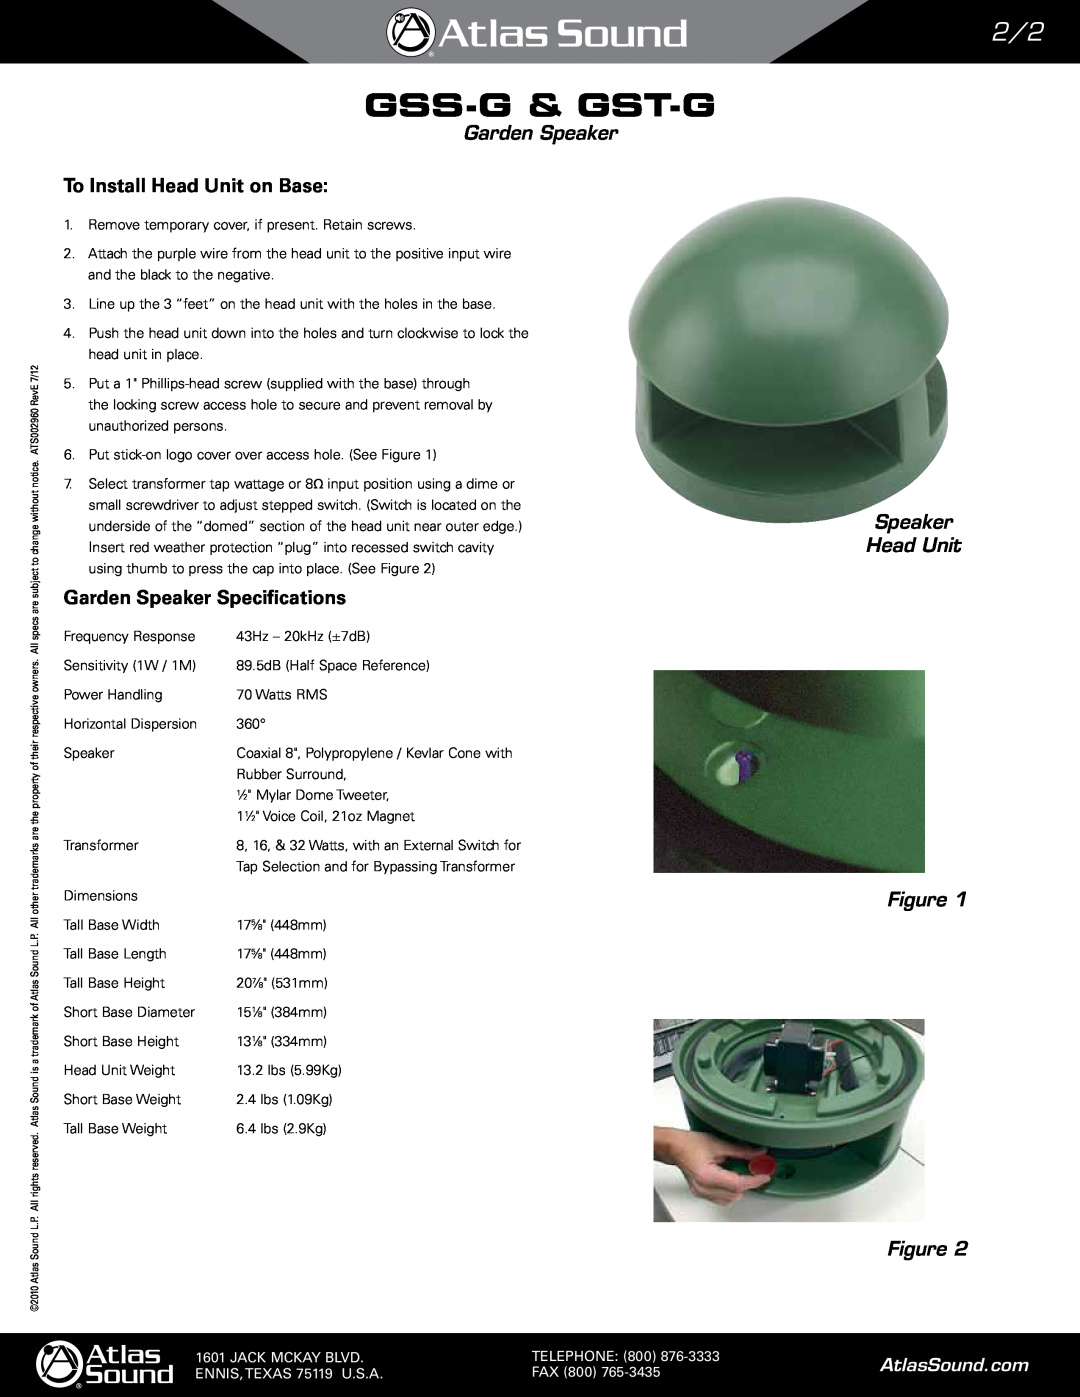 Atlas Sound GST-G To Install Head Unit on Base, Garden Speaker Specifications, Speaker Head Unit Figure Figure, Telephone 